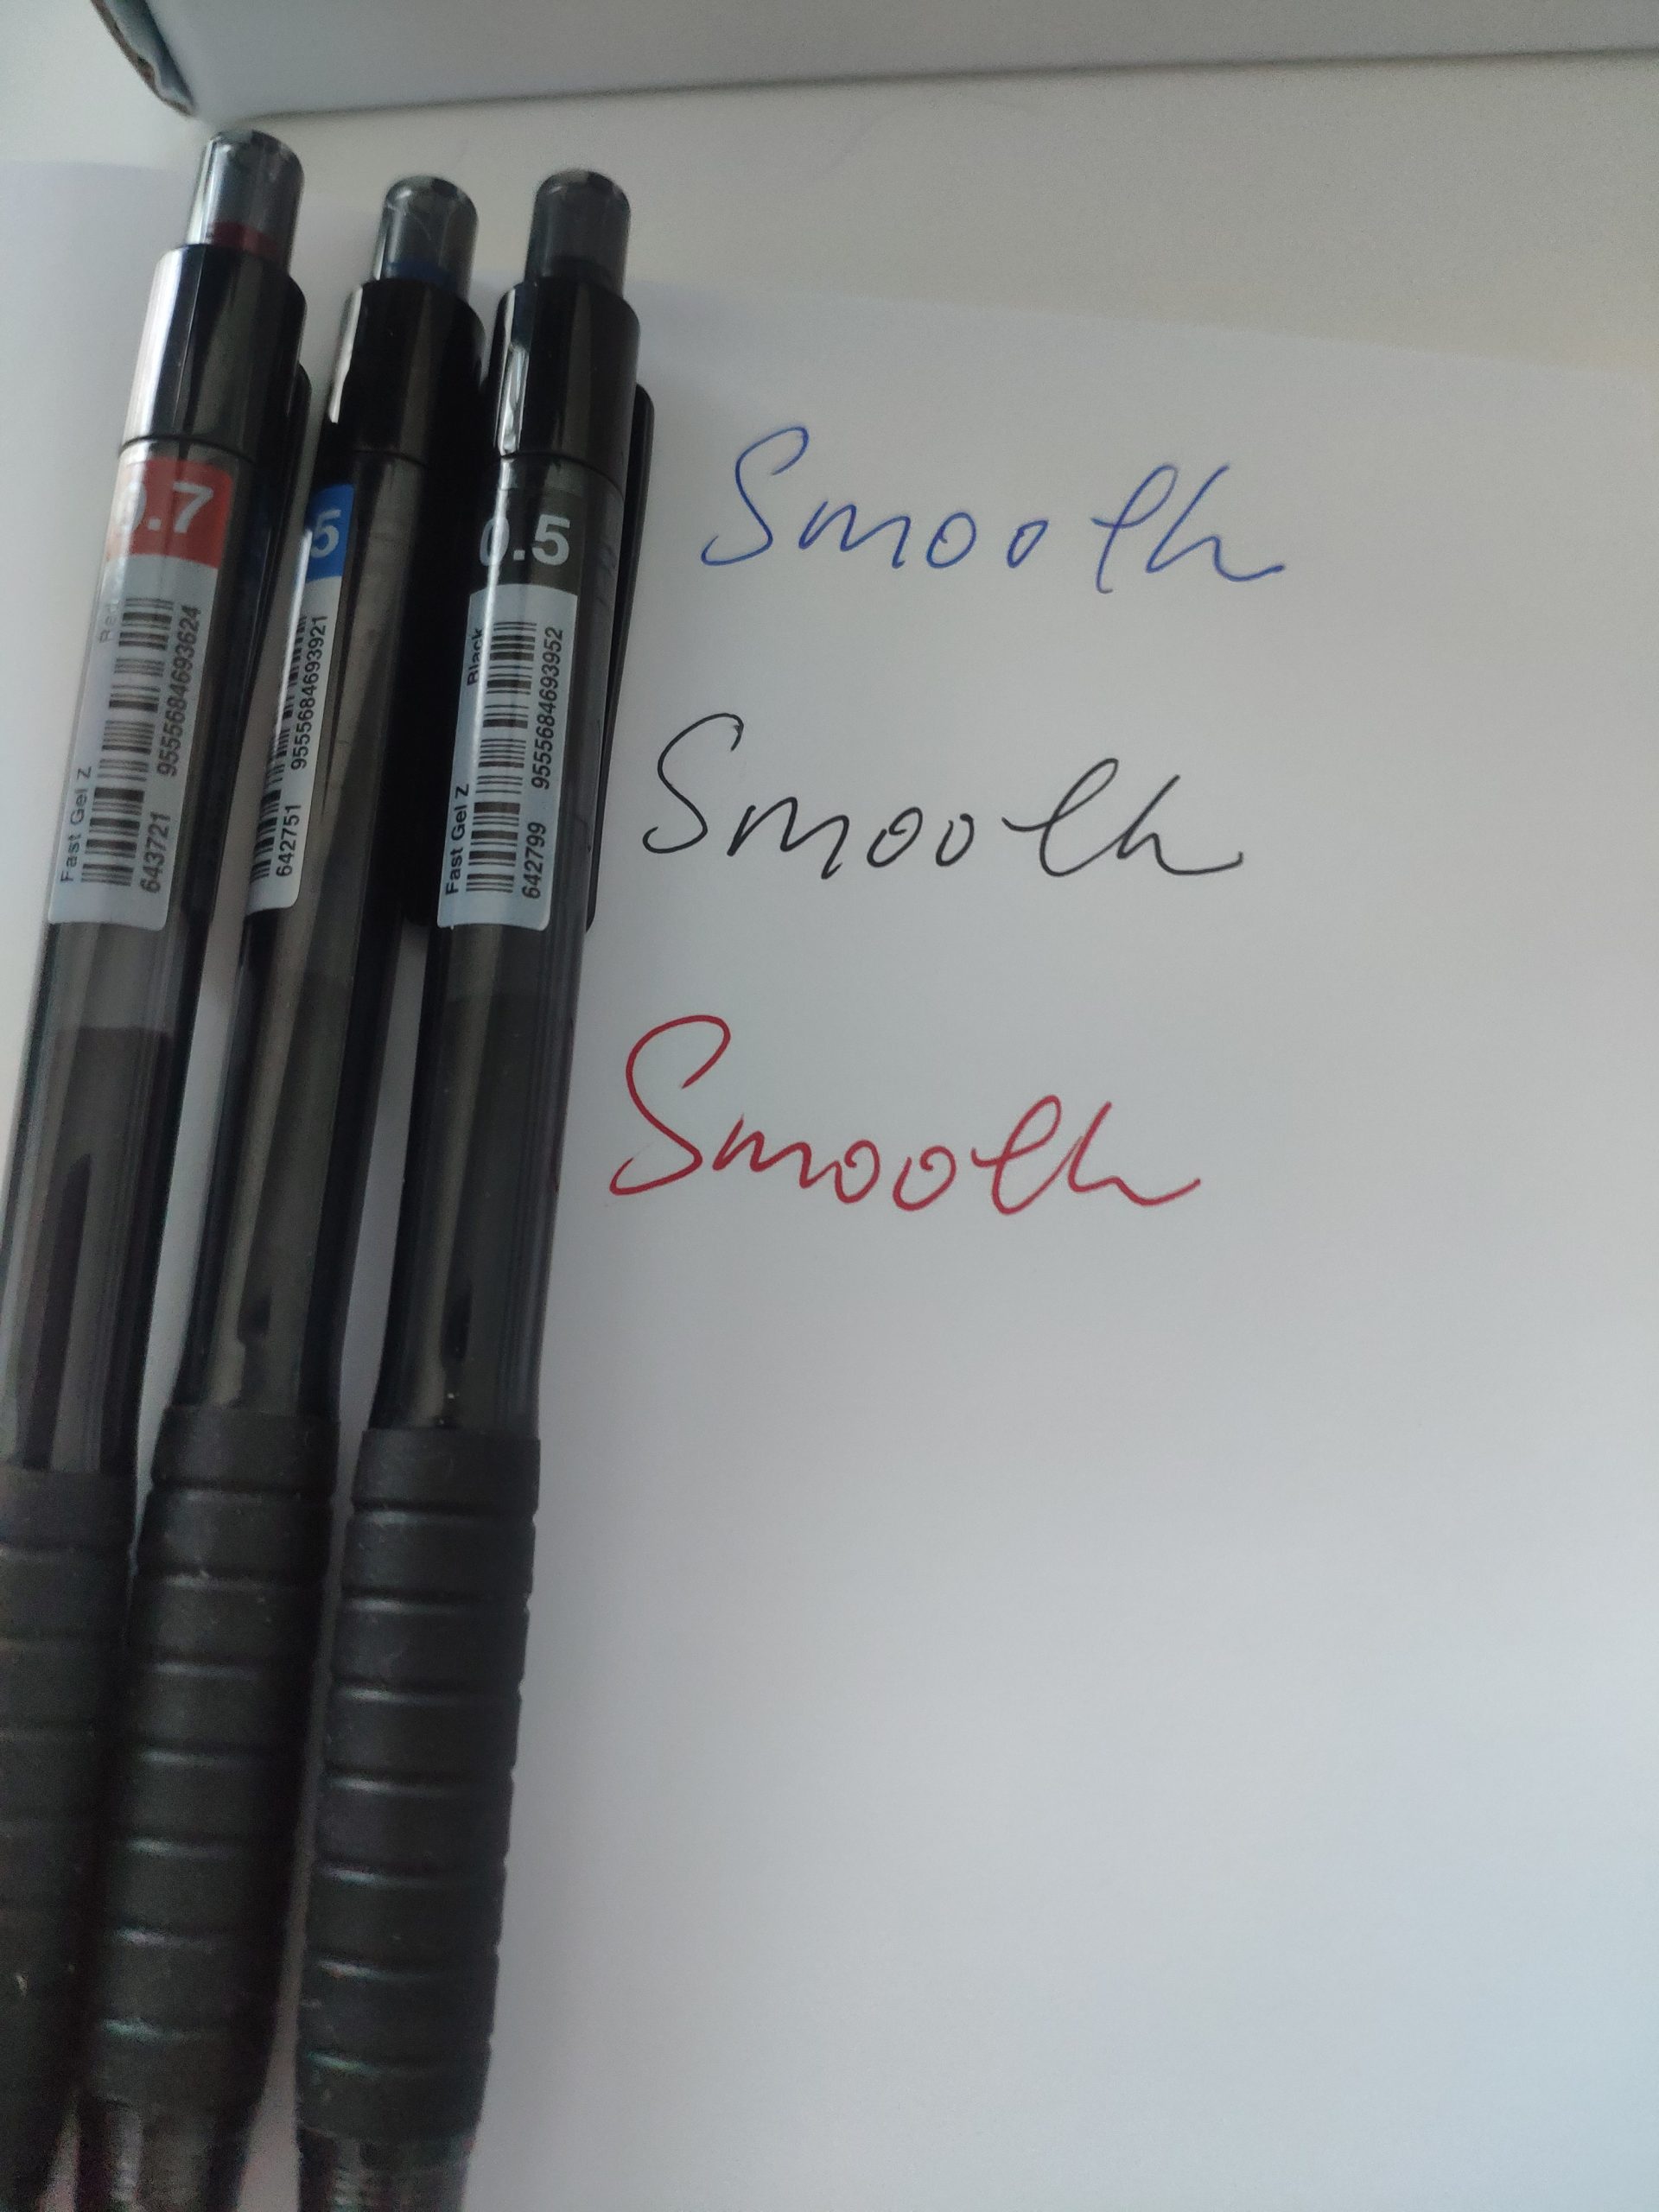 Faber-Castell Fast Gel Z 0.5 mm Gel Ink Pen Review — The Pen Addict